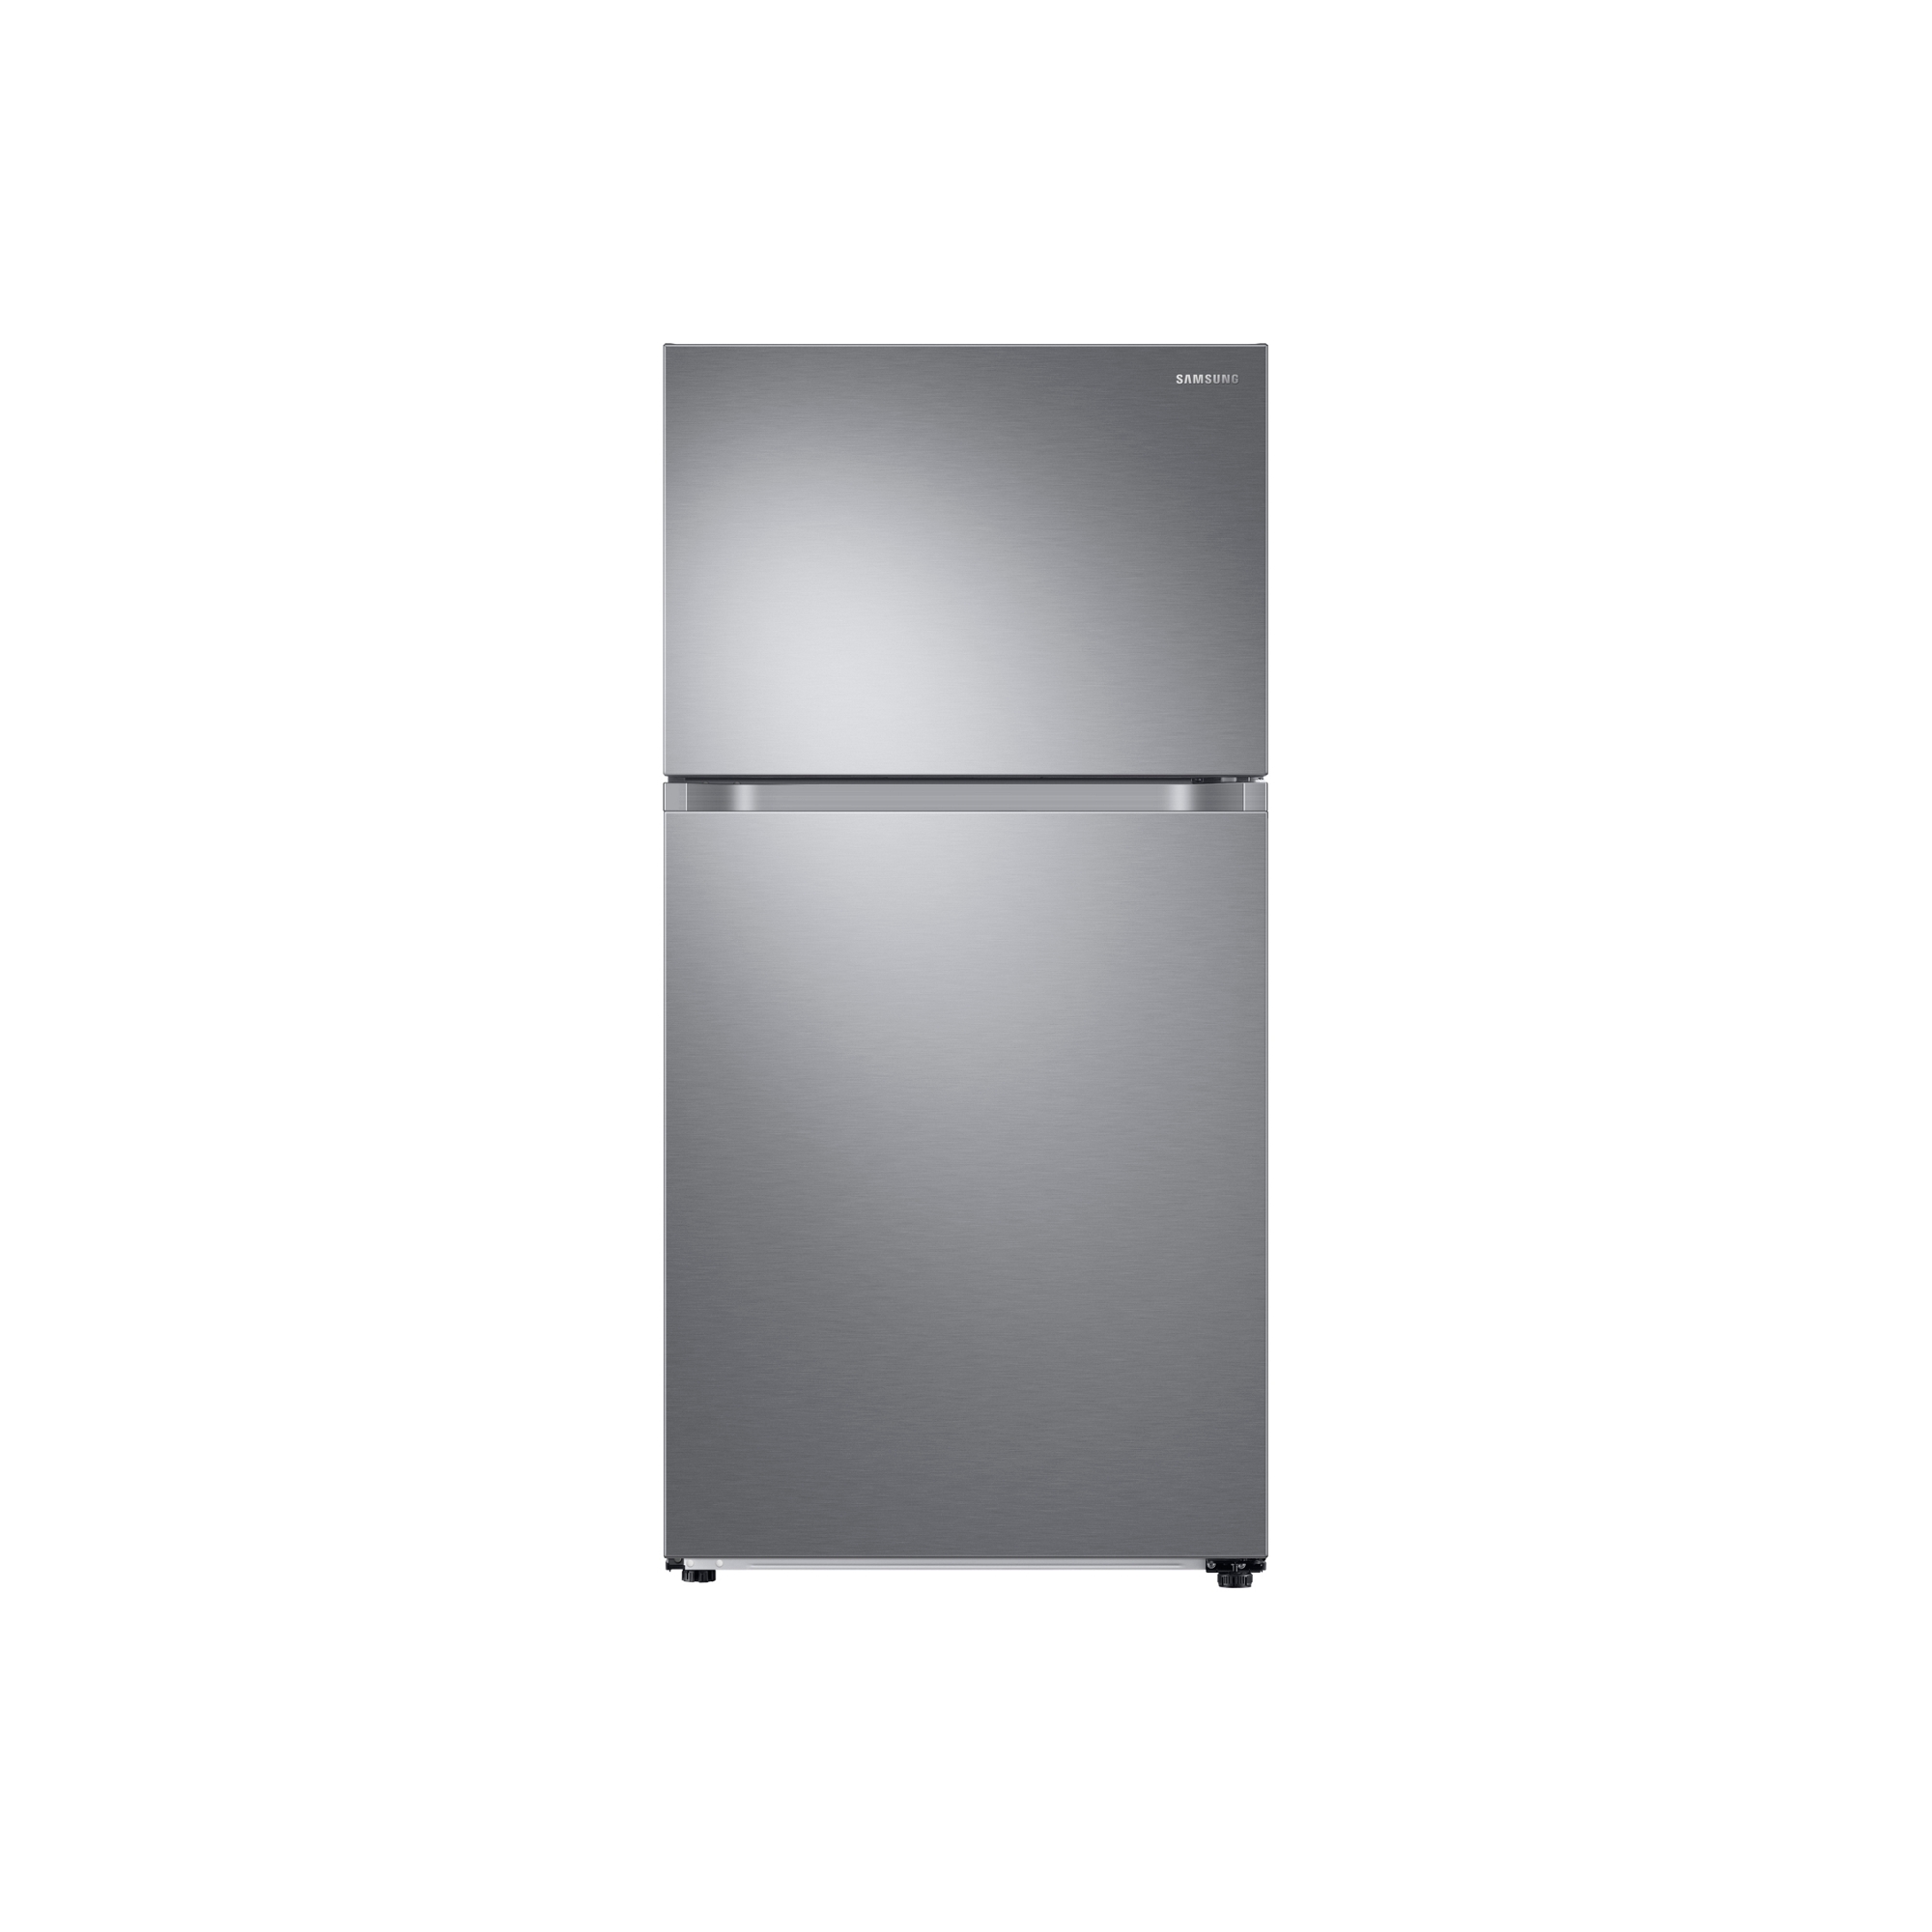 Samsung RT21M6213SR top freezer refrigerator review: Simple, yet